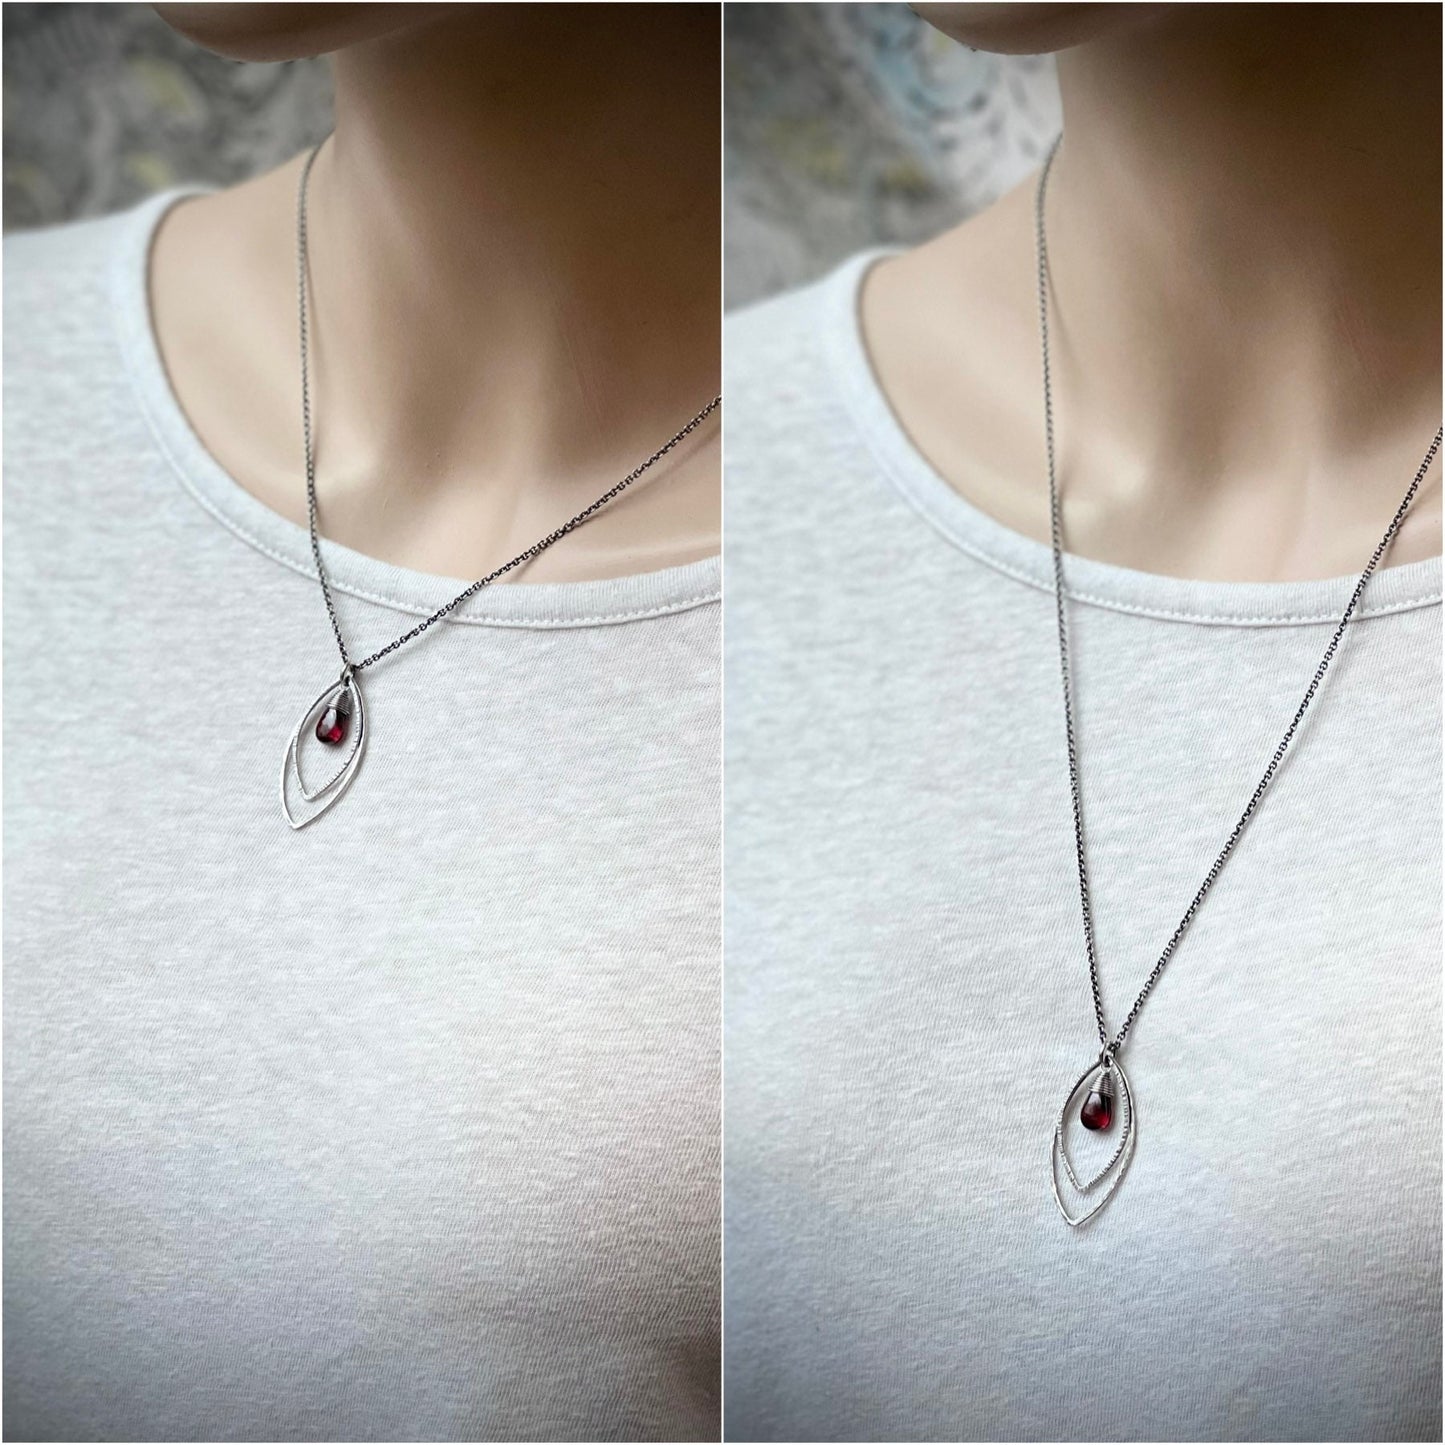 Garnet Sterling Silver Necklace - Genuine Garnet Pendant in Textured Sterling Silver Petals